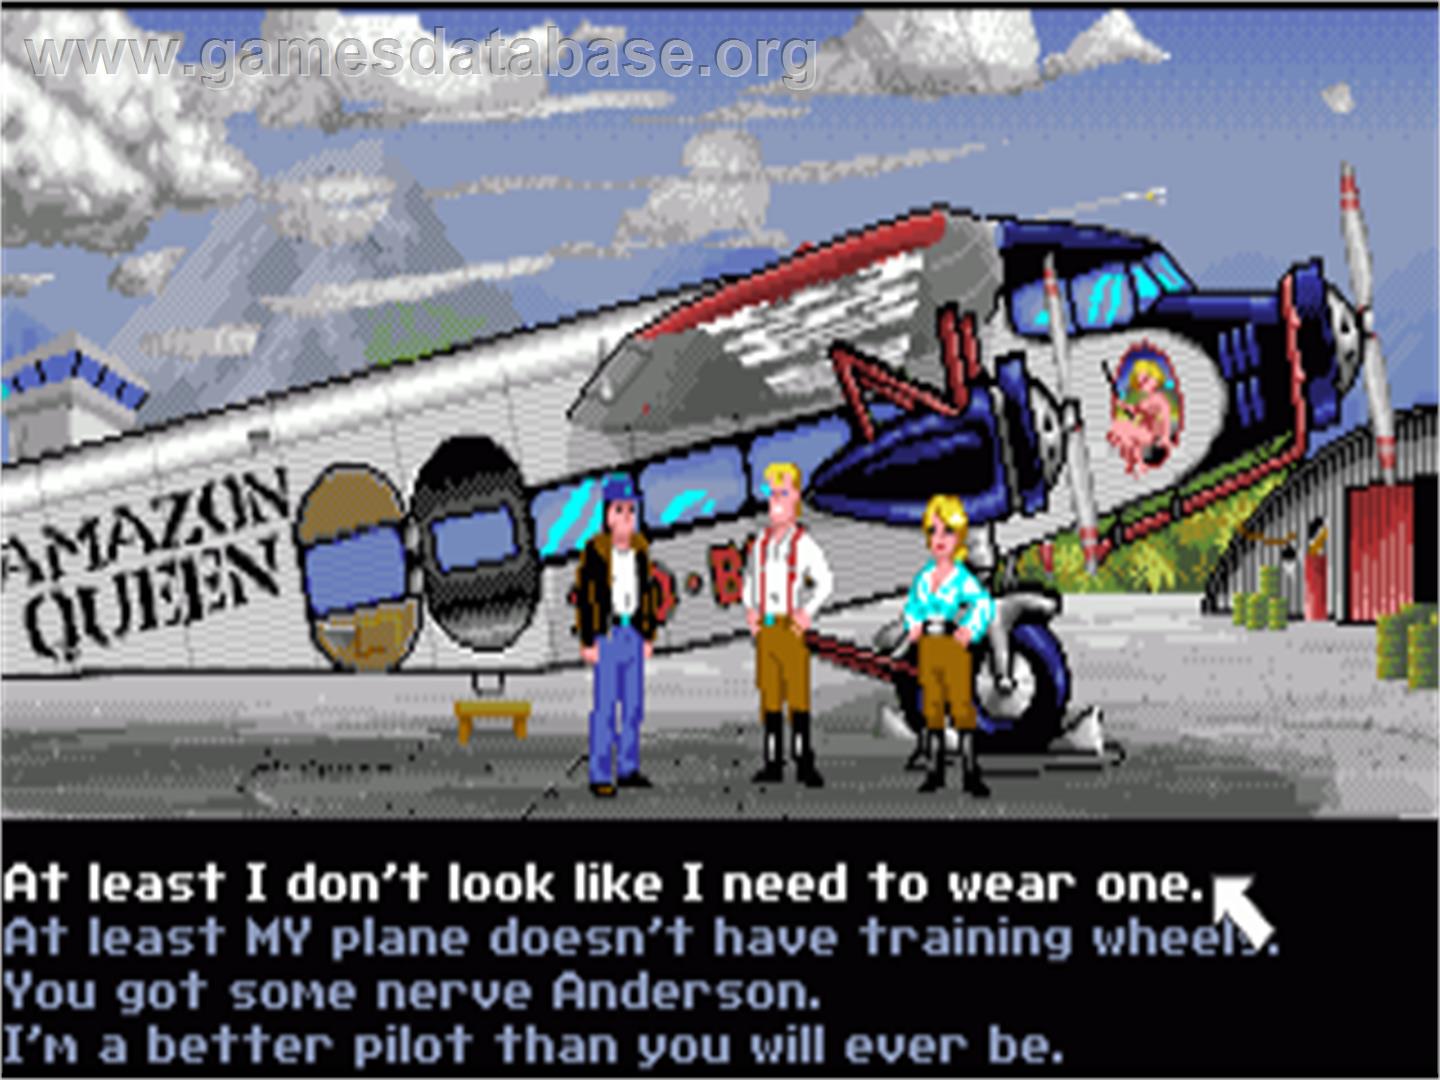 Flight of the Amazon Queen - Commodore Amiga - Artwork - In Game